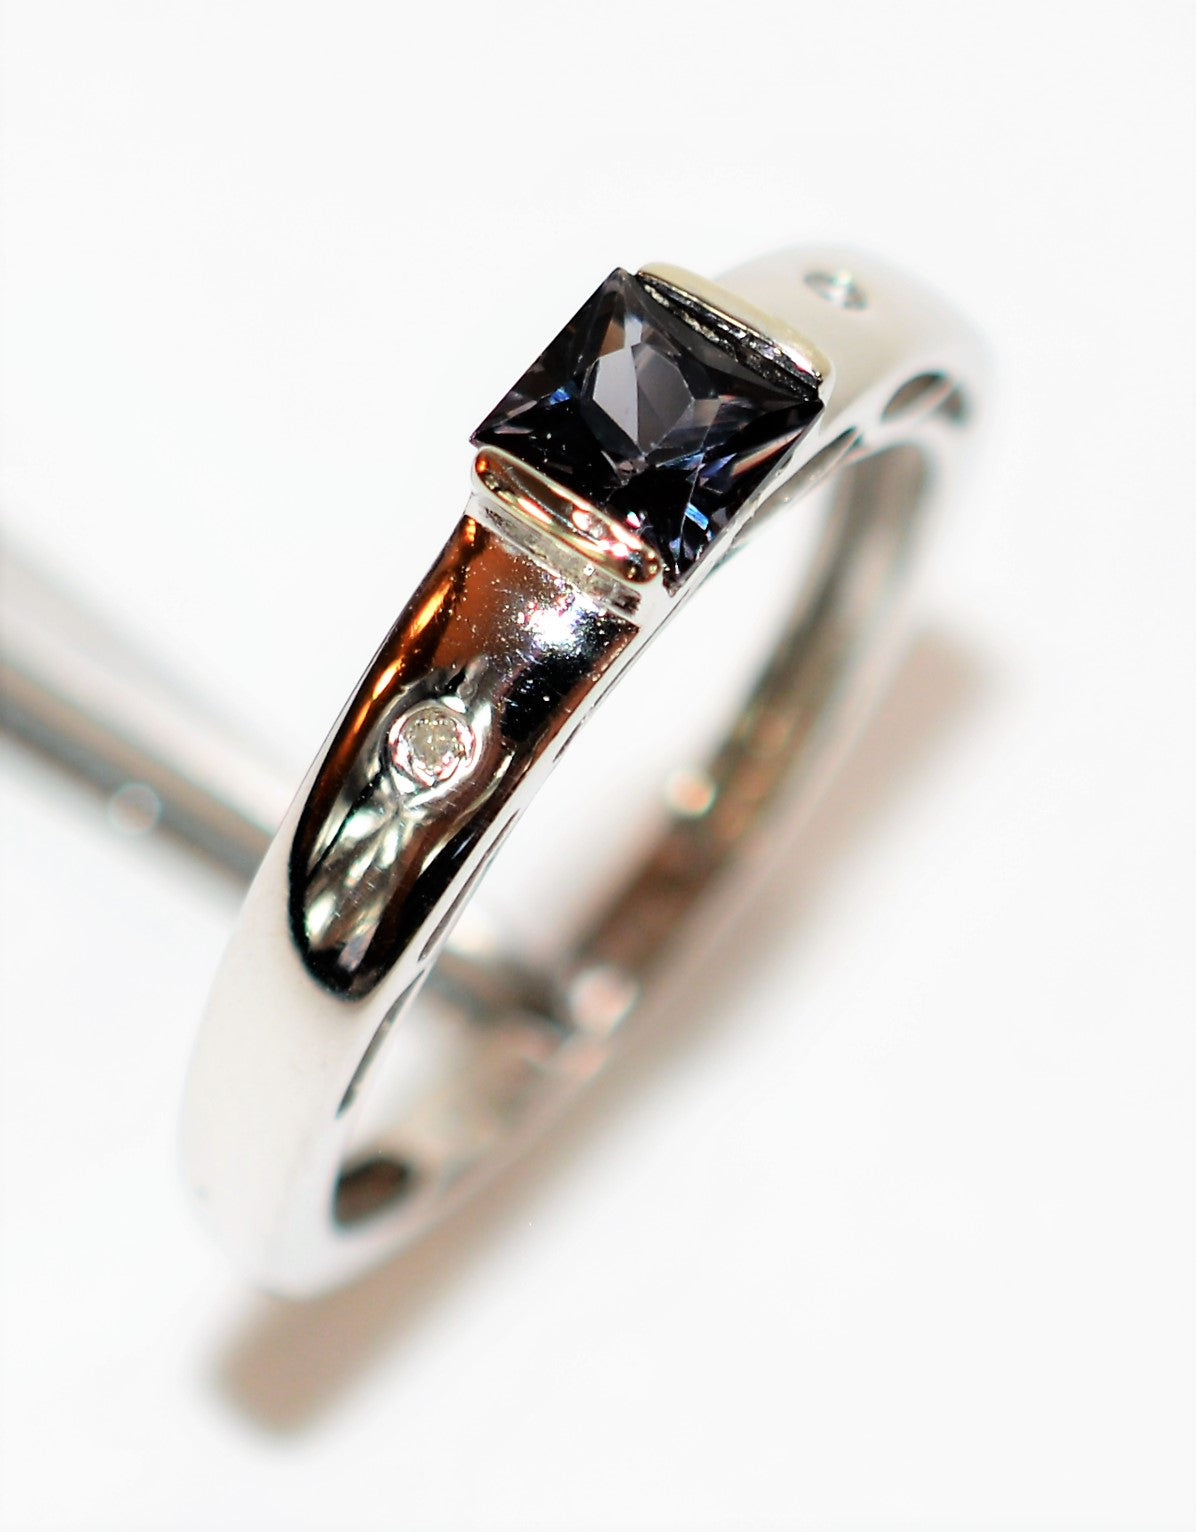 Natural Spinel & Diamond Ring 10K Solid White Gold .66tcw Gemstone Ring Spinel Ring Purple Ring Birthstone Ring Statement Ring Women's Ring